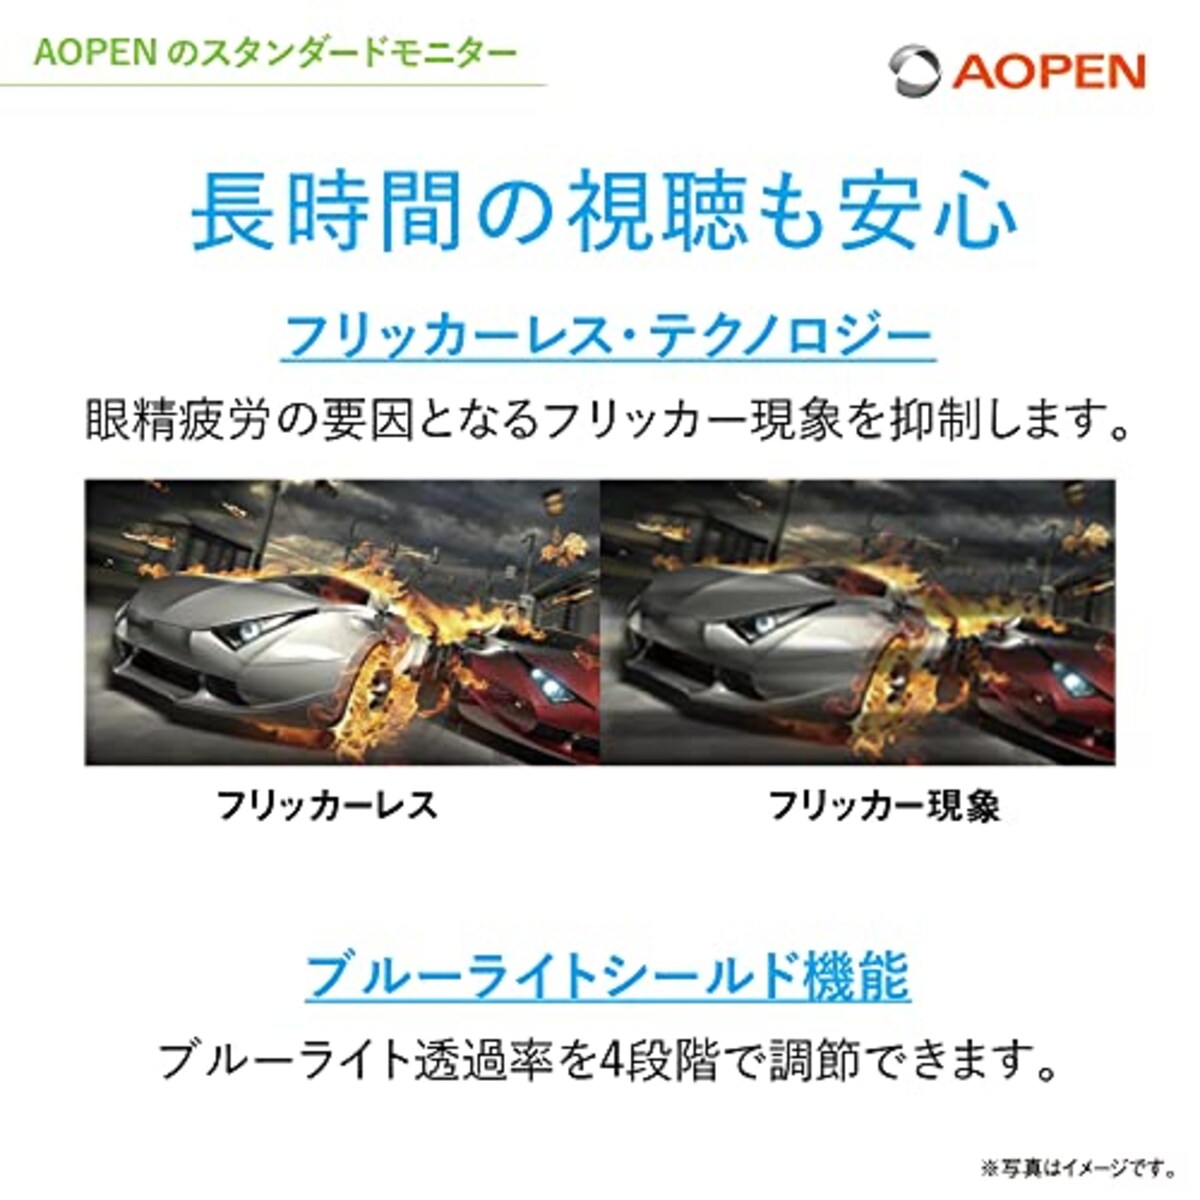  AOPEN Acer スタンダードモニター 27インチ 27E1bi フルHD IPS 75Hz 5ms(GTG) HDMI ブルーライトシールド 3年保証画像5 